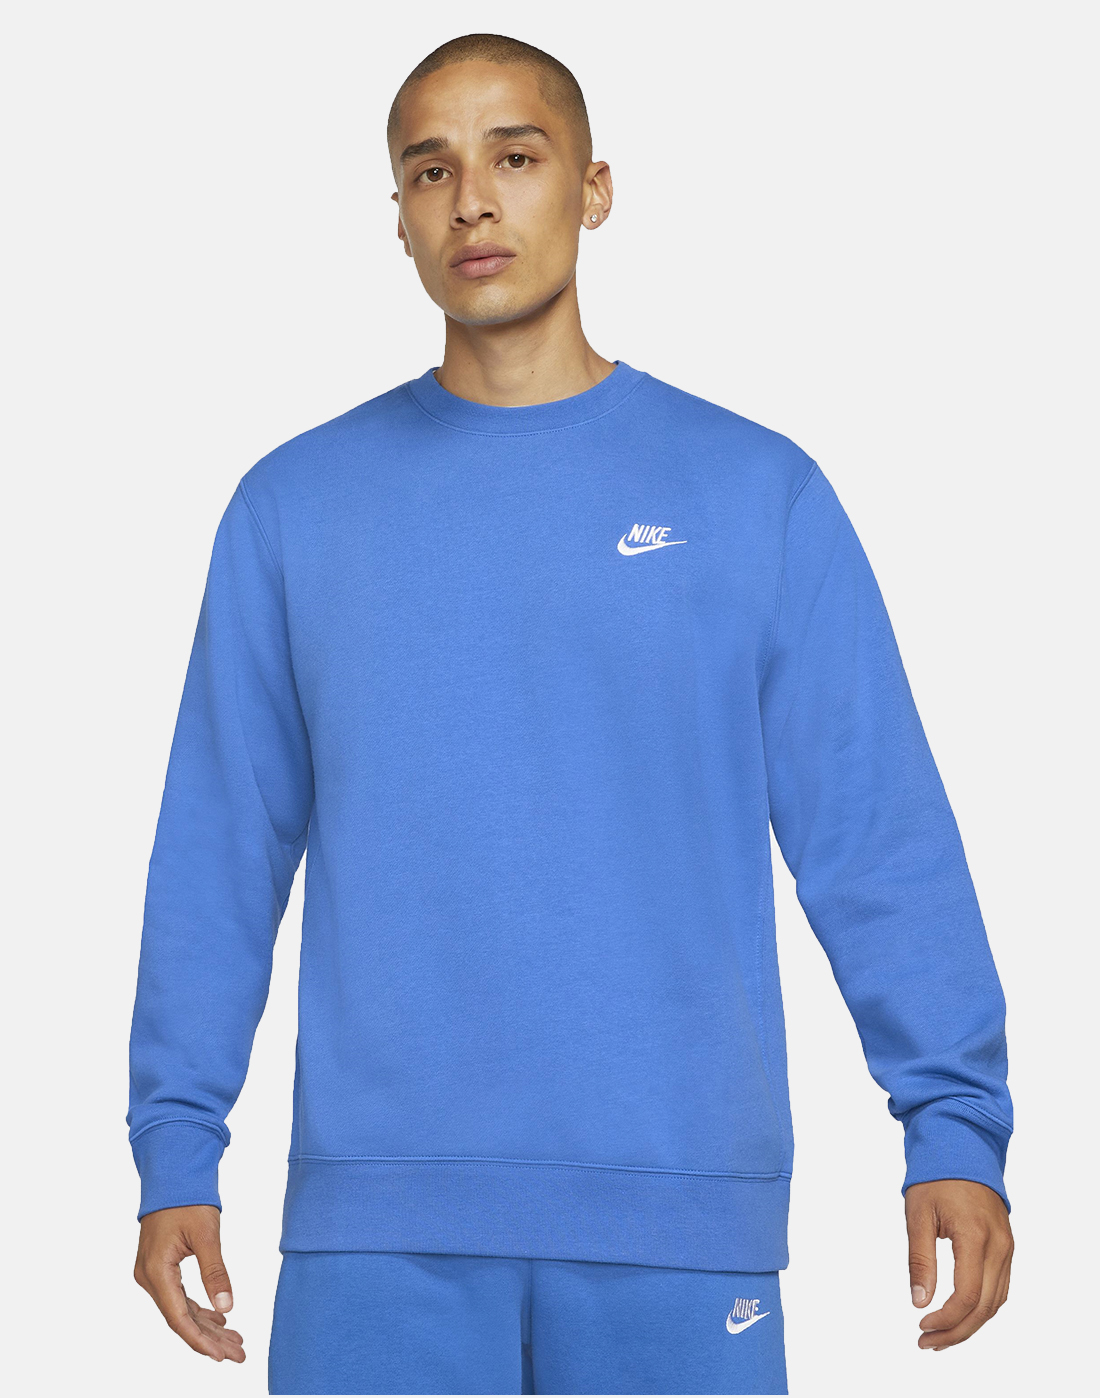 Tegenstander Schuine streep elektrode Nike Mens Club Fleece Crew Neck Sweatshirt - Blue | Life Style Sports UK